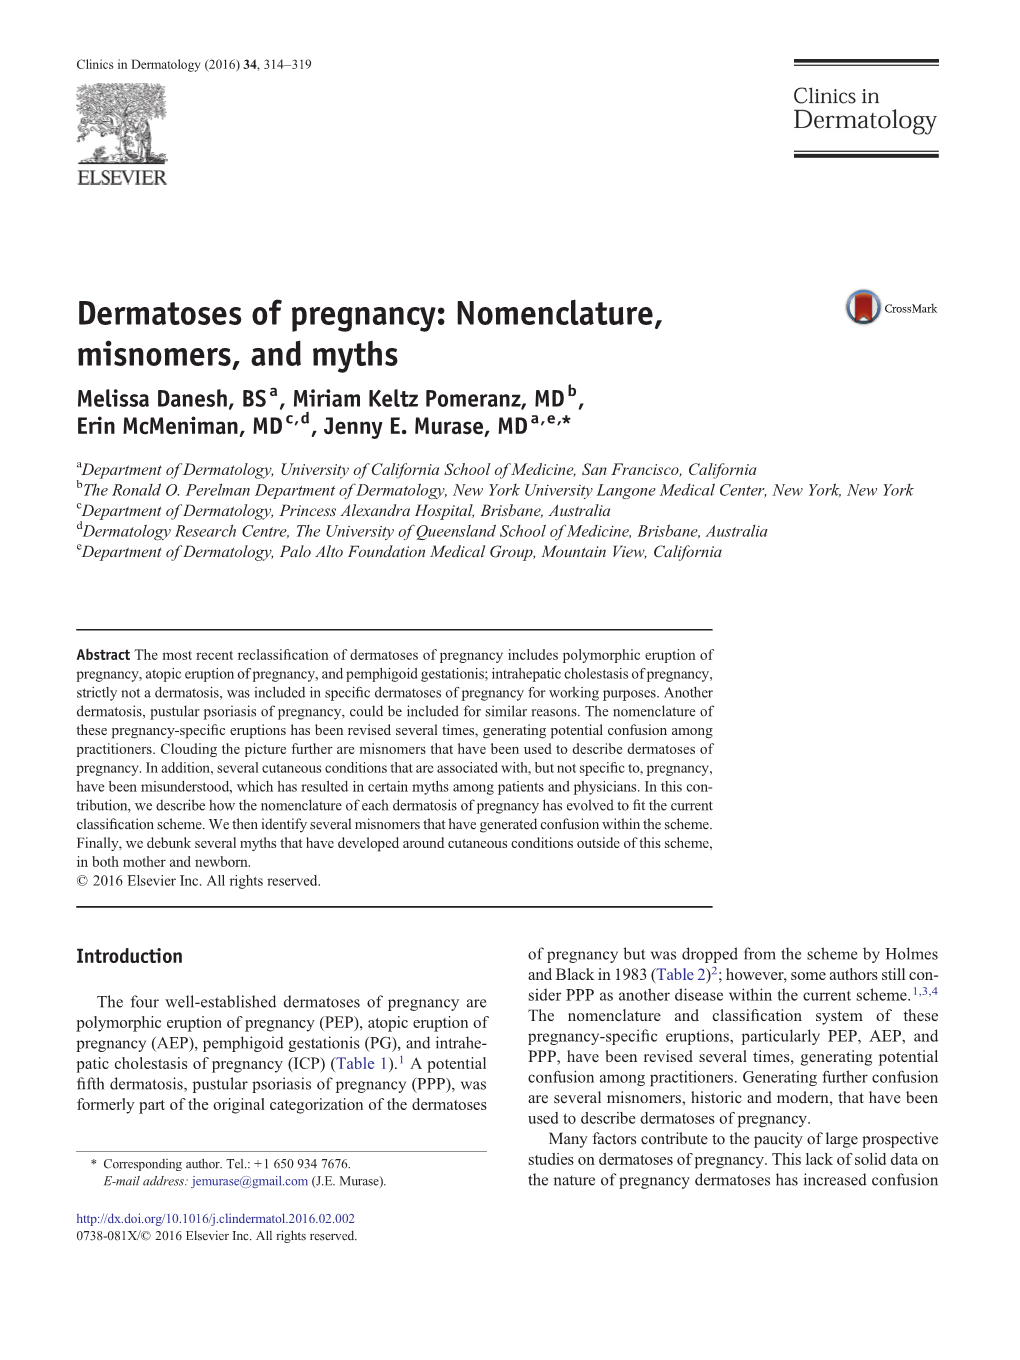 Dermatoses of Pregnancy: Nomenclature, Misnomers, and Myths Melissa Danesh, BS A, Miriam Keltz Pomeranz, MD B, Erin Mcmeniman, MD C,D, Jenny E